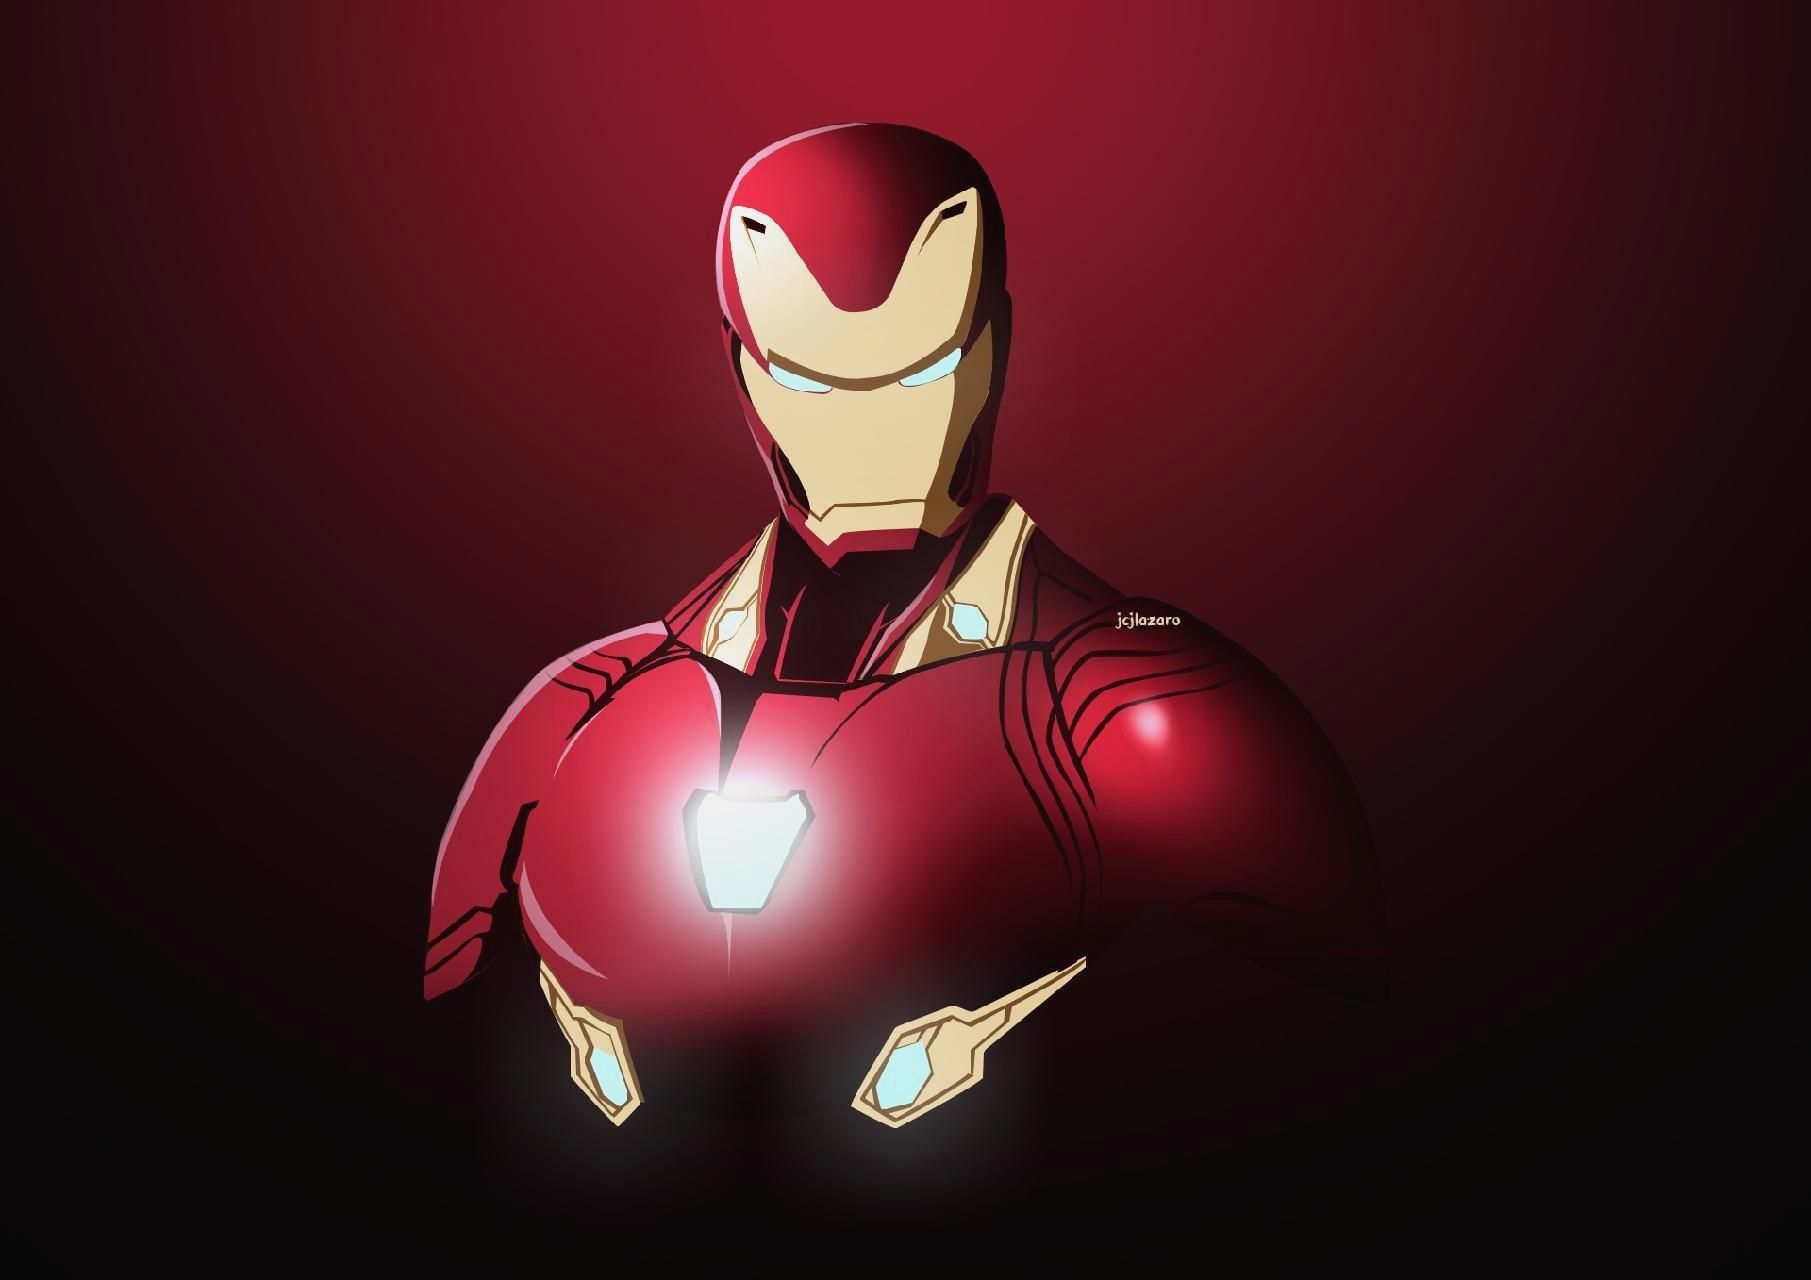 Fondos de pantalla de Iron Man - FondosMil